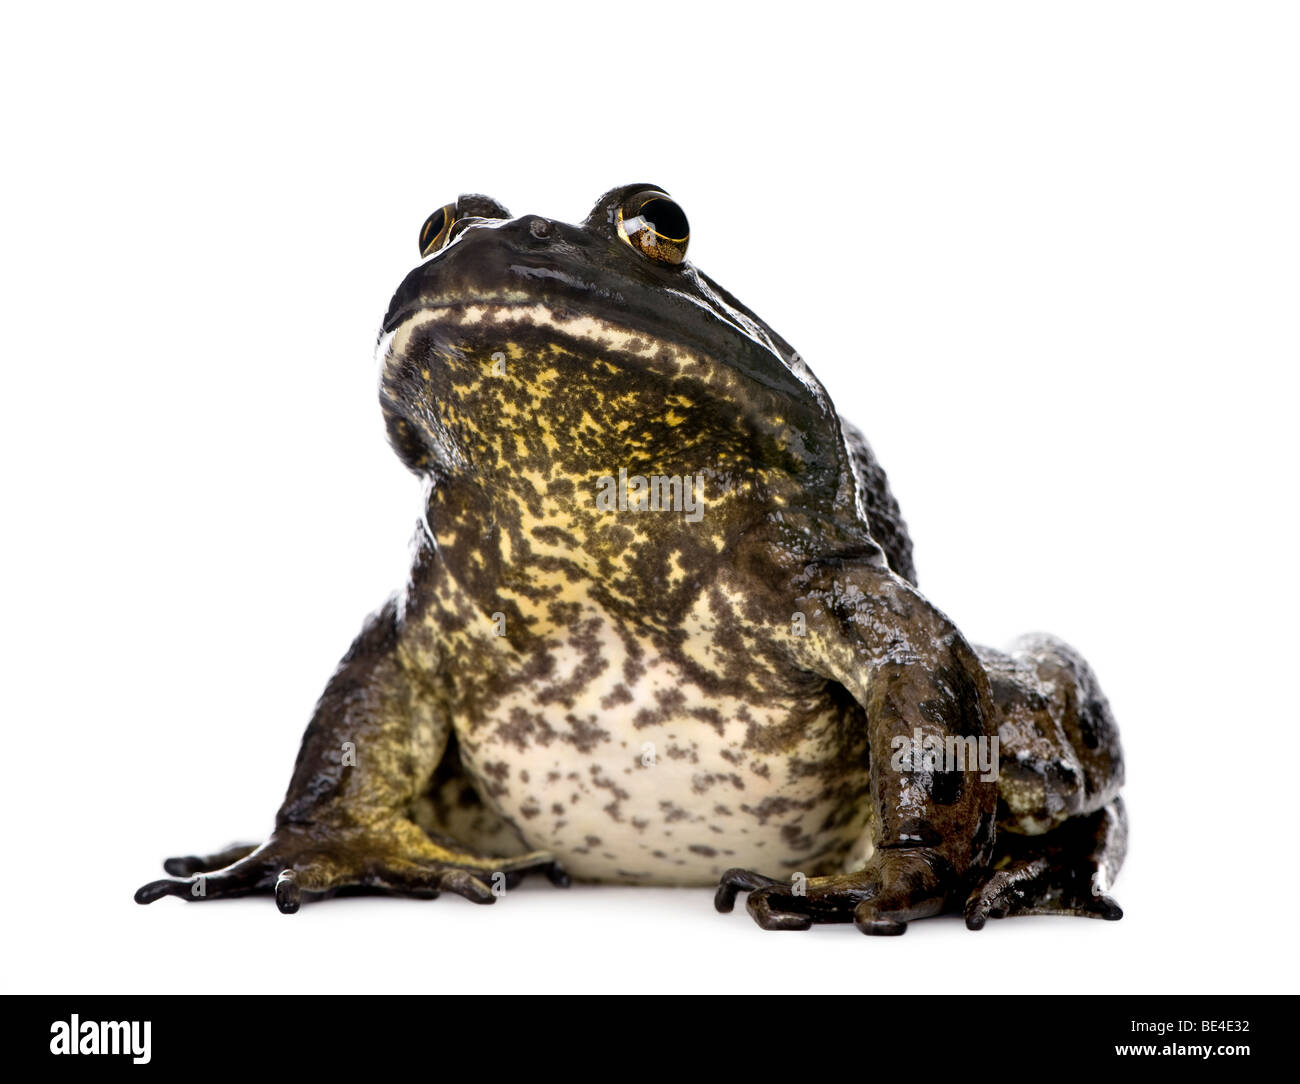 Bullfrog, Rana catesbeiana, against white background, studio shot Stock Photo